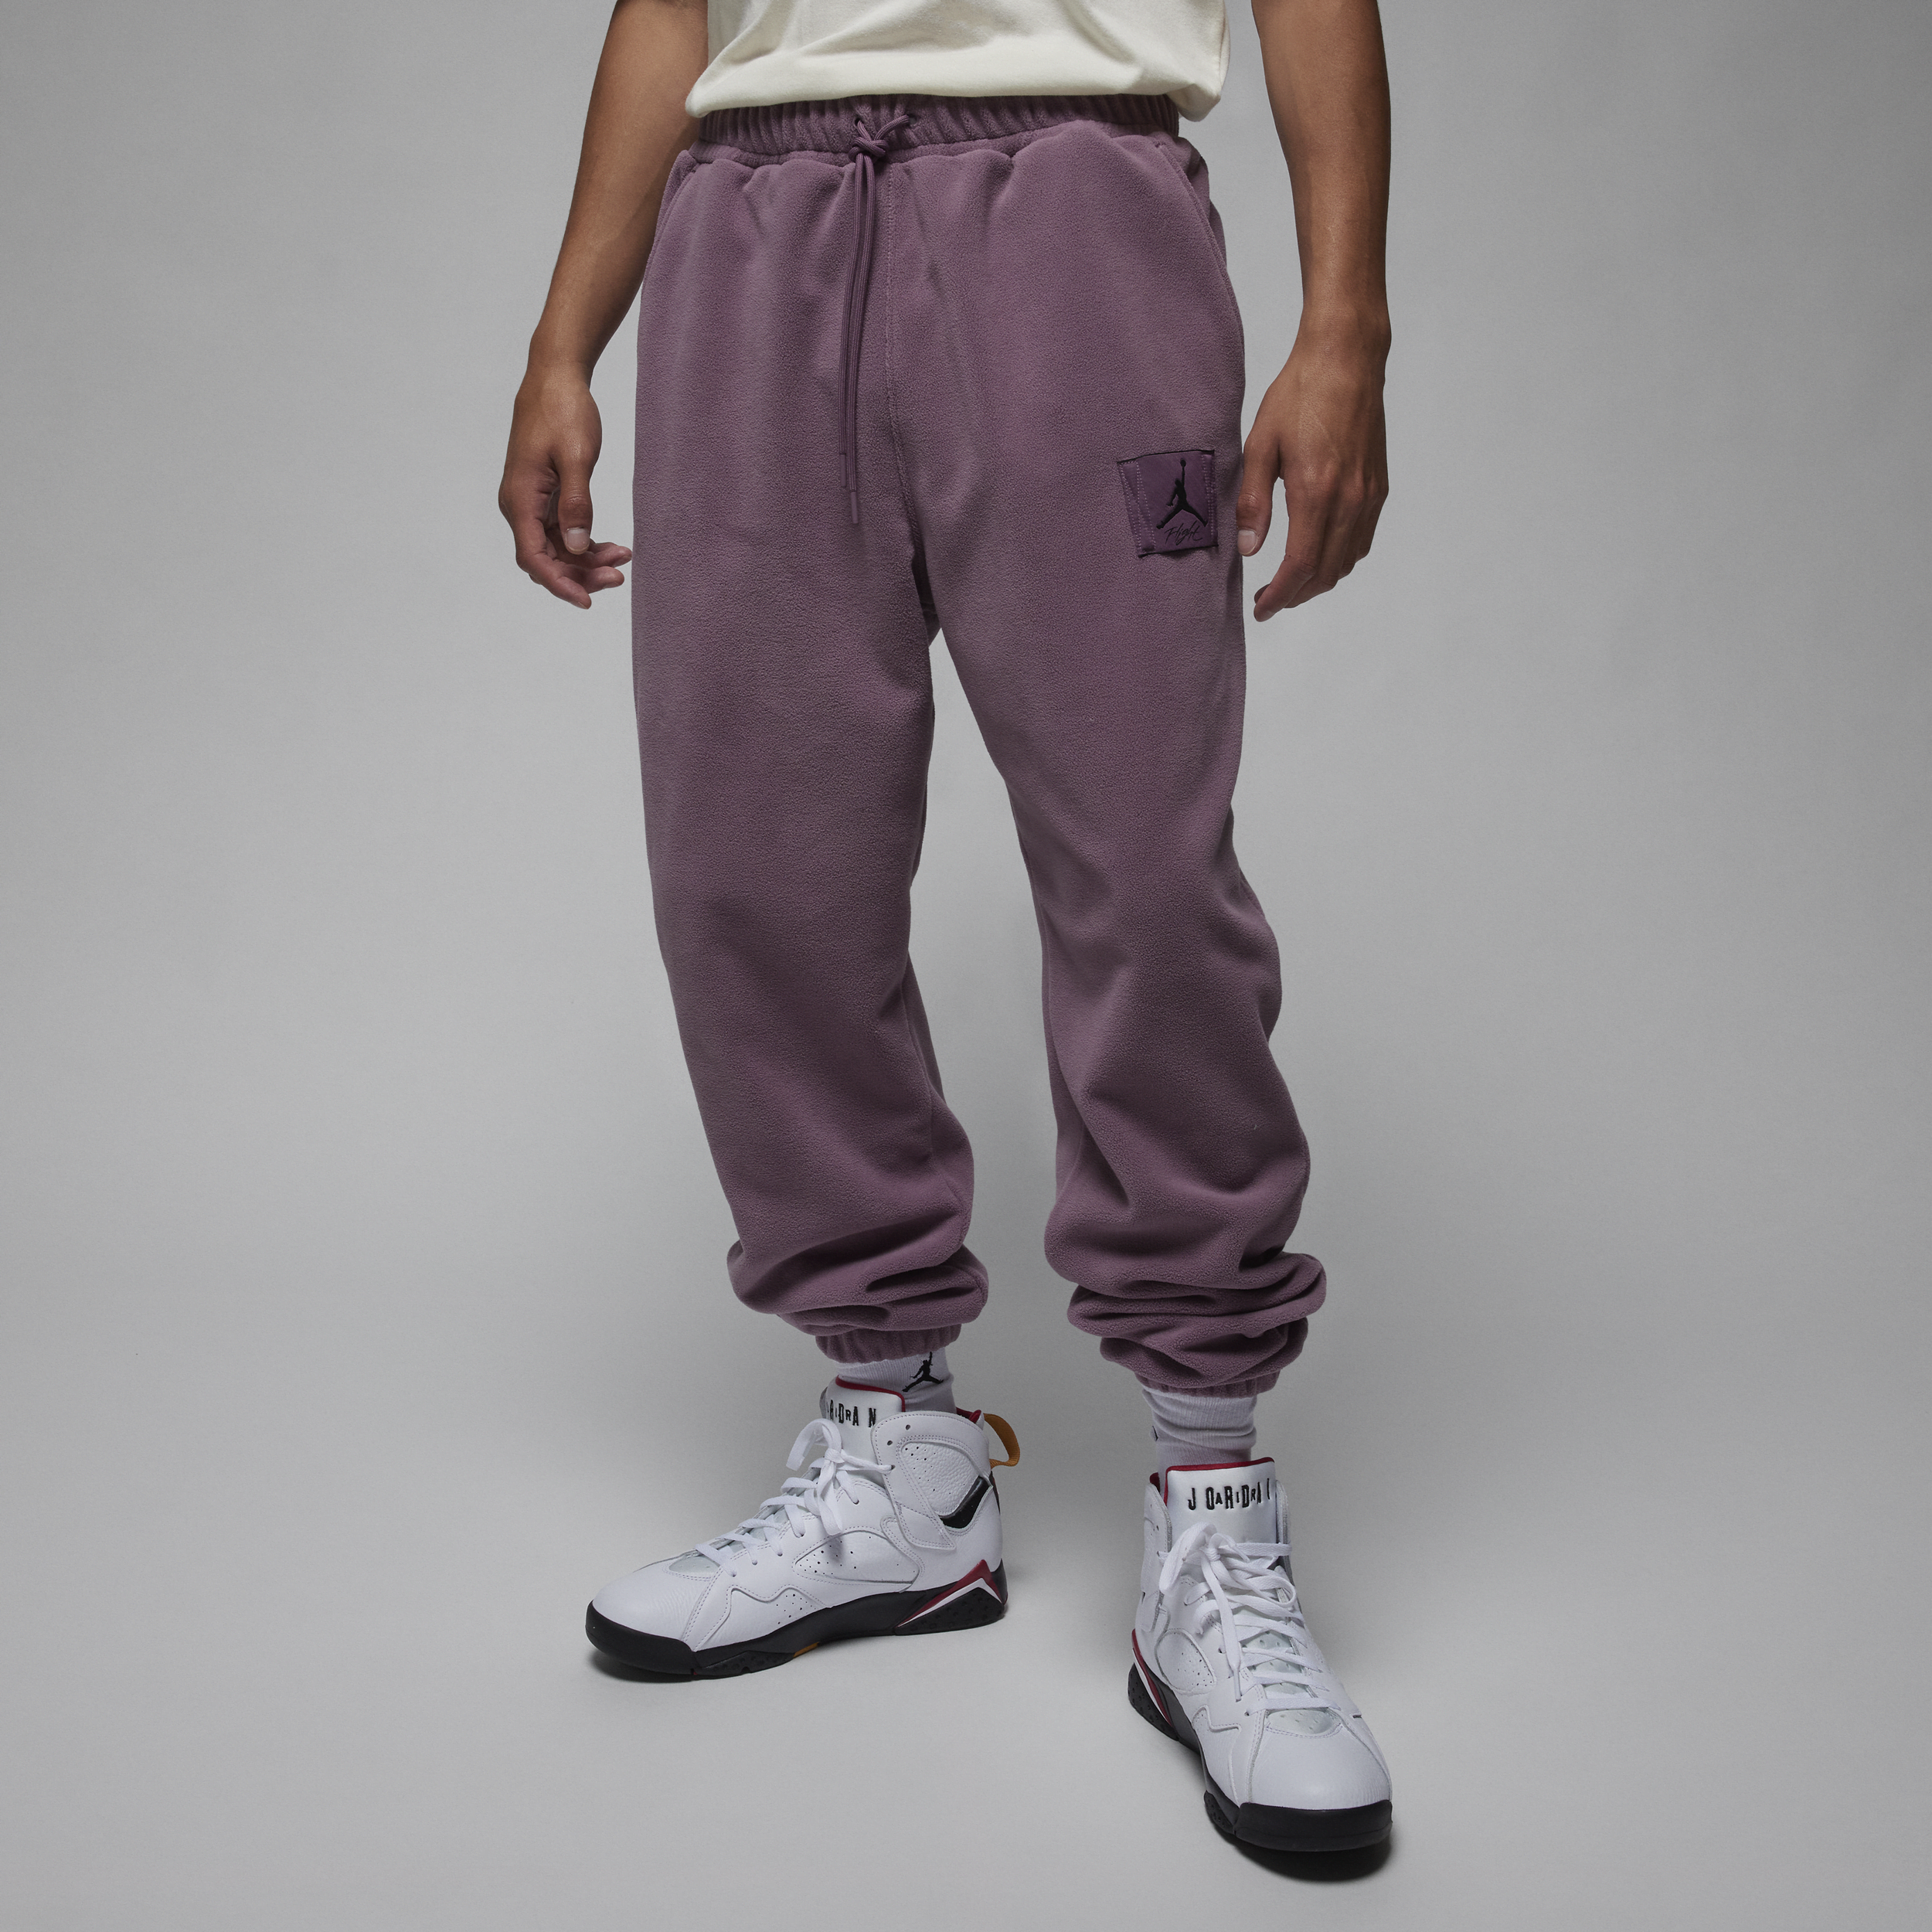 Nike Pantaloni in fleece per l'inverno Jordan Essentials – Uomo - Viola